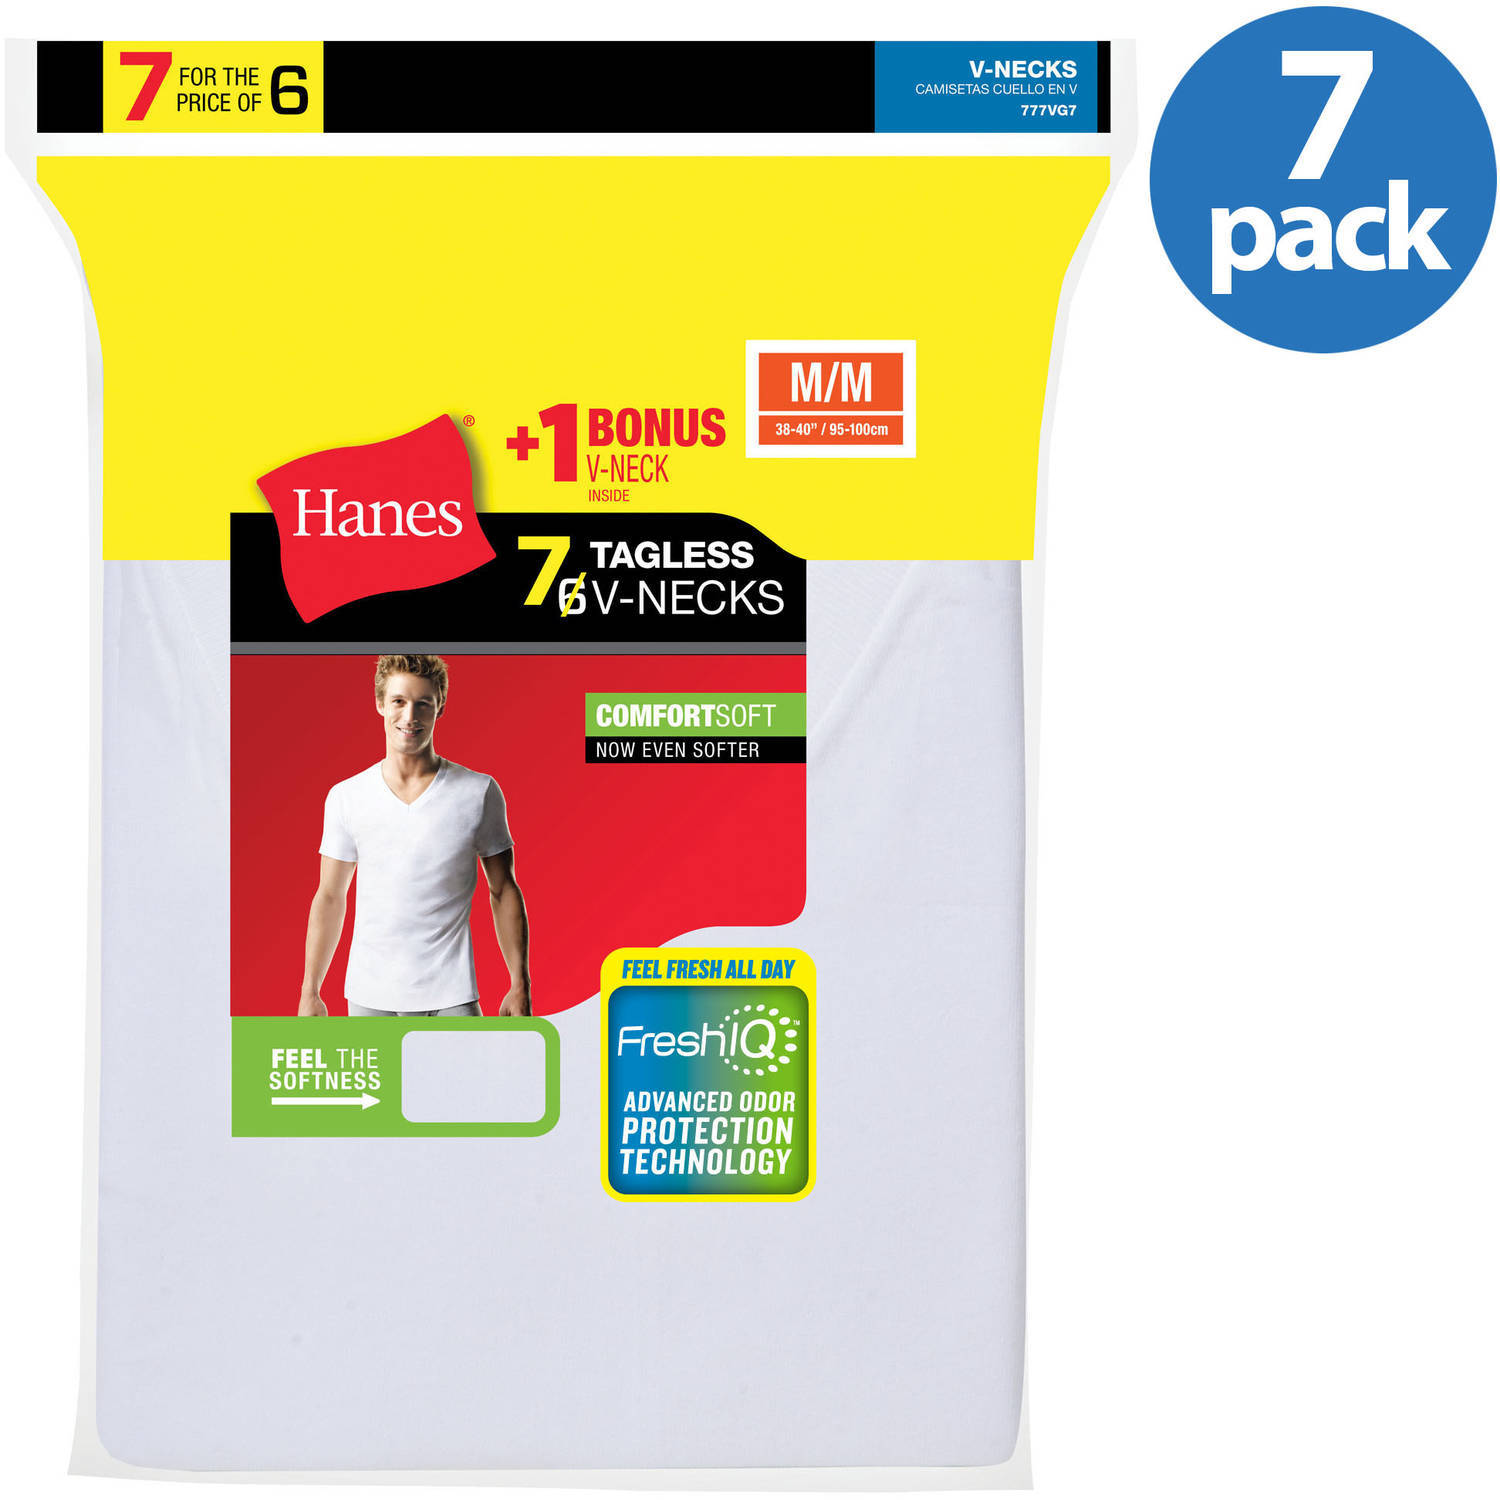 Hanes Men's Fresh IQ White V-Neck T-Shirt 6+1 Free Bonus Pack - image 1 of 6